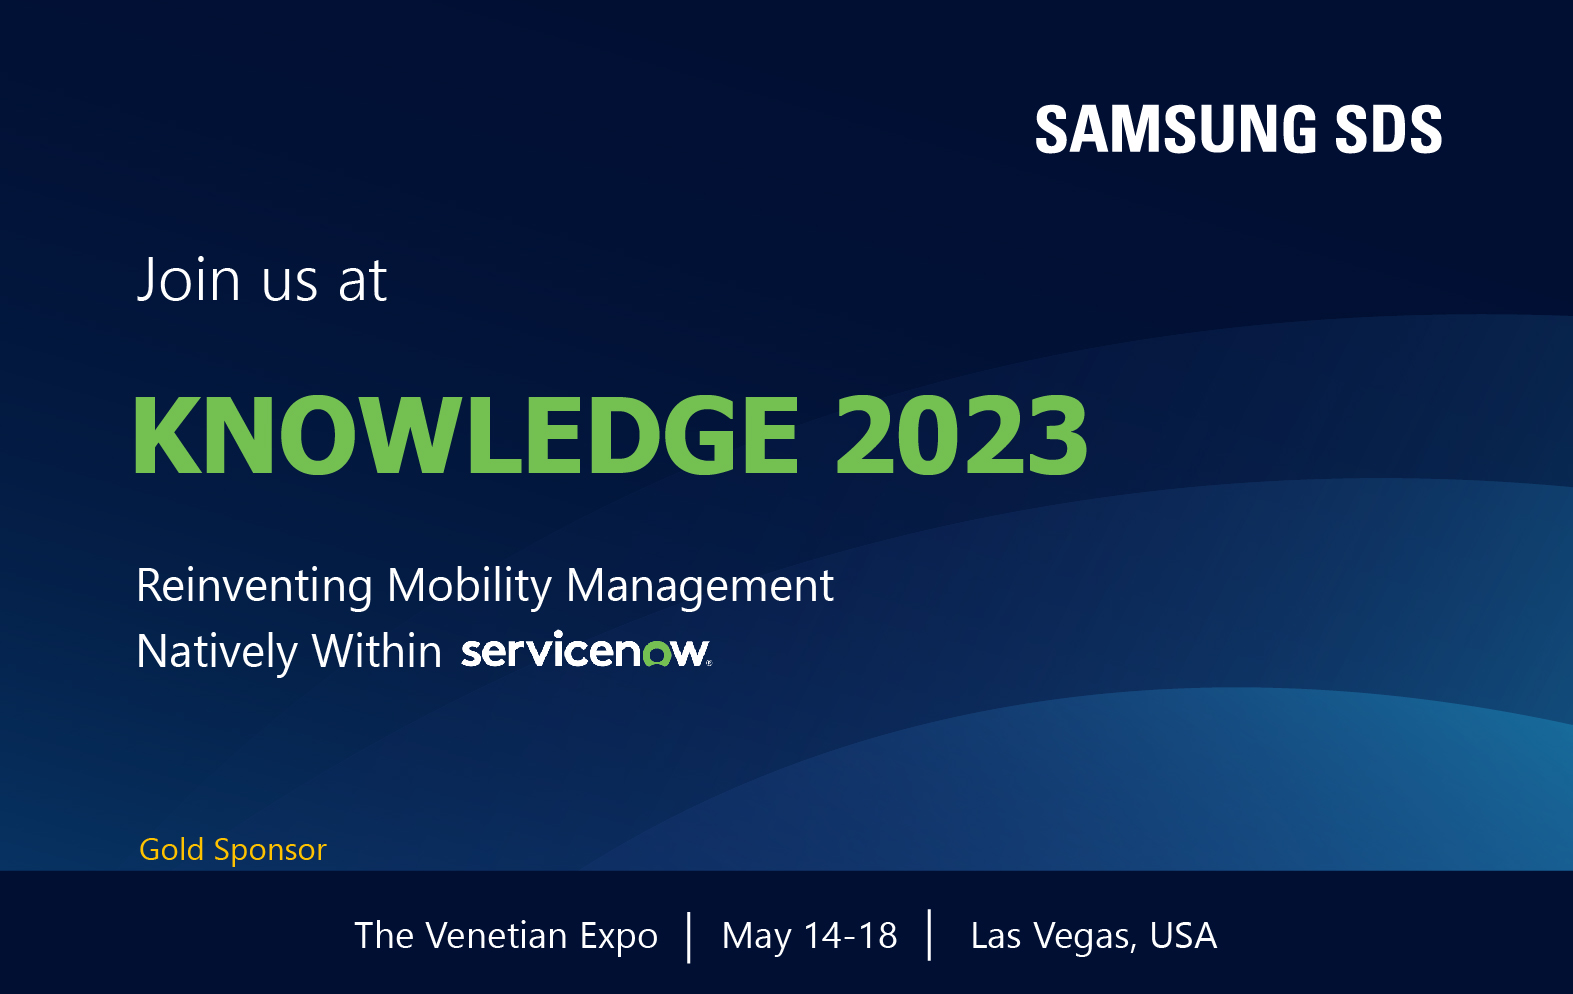 Samsung SDS @ Knowledge 2023